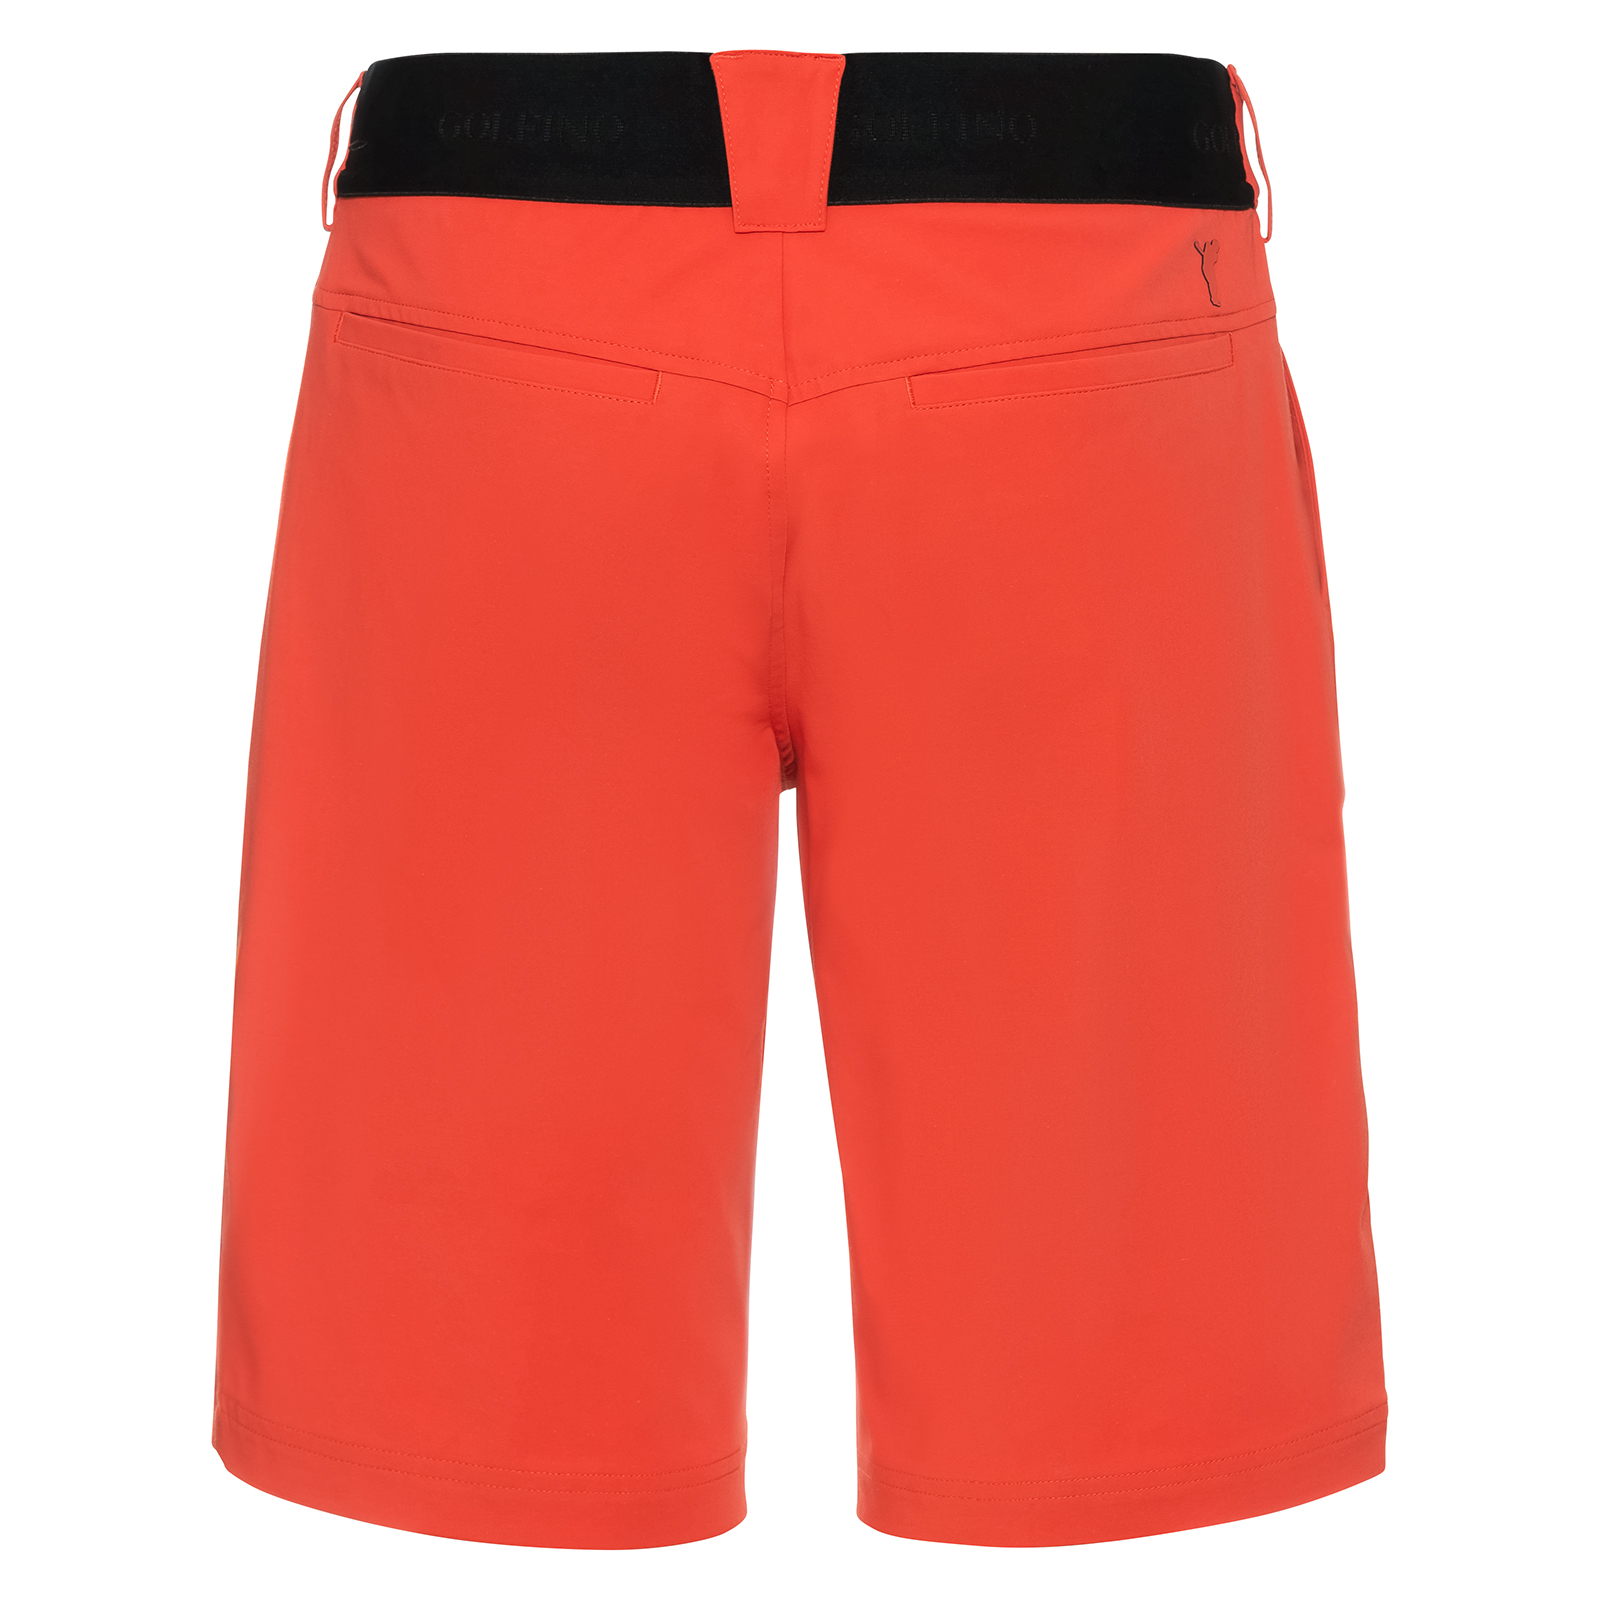 Men's versatile extra slim fit Bermuda-style golf shorts